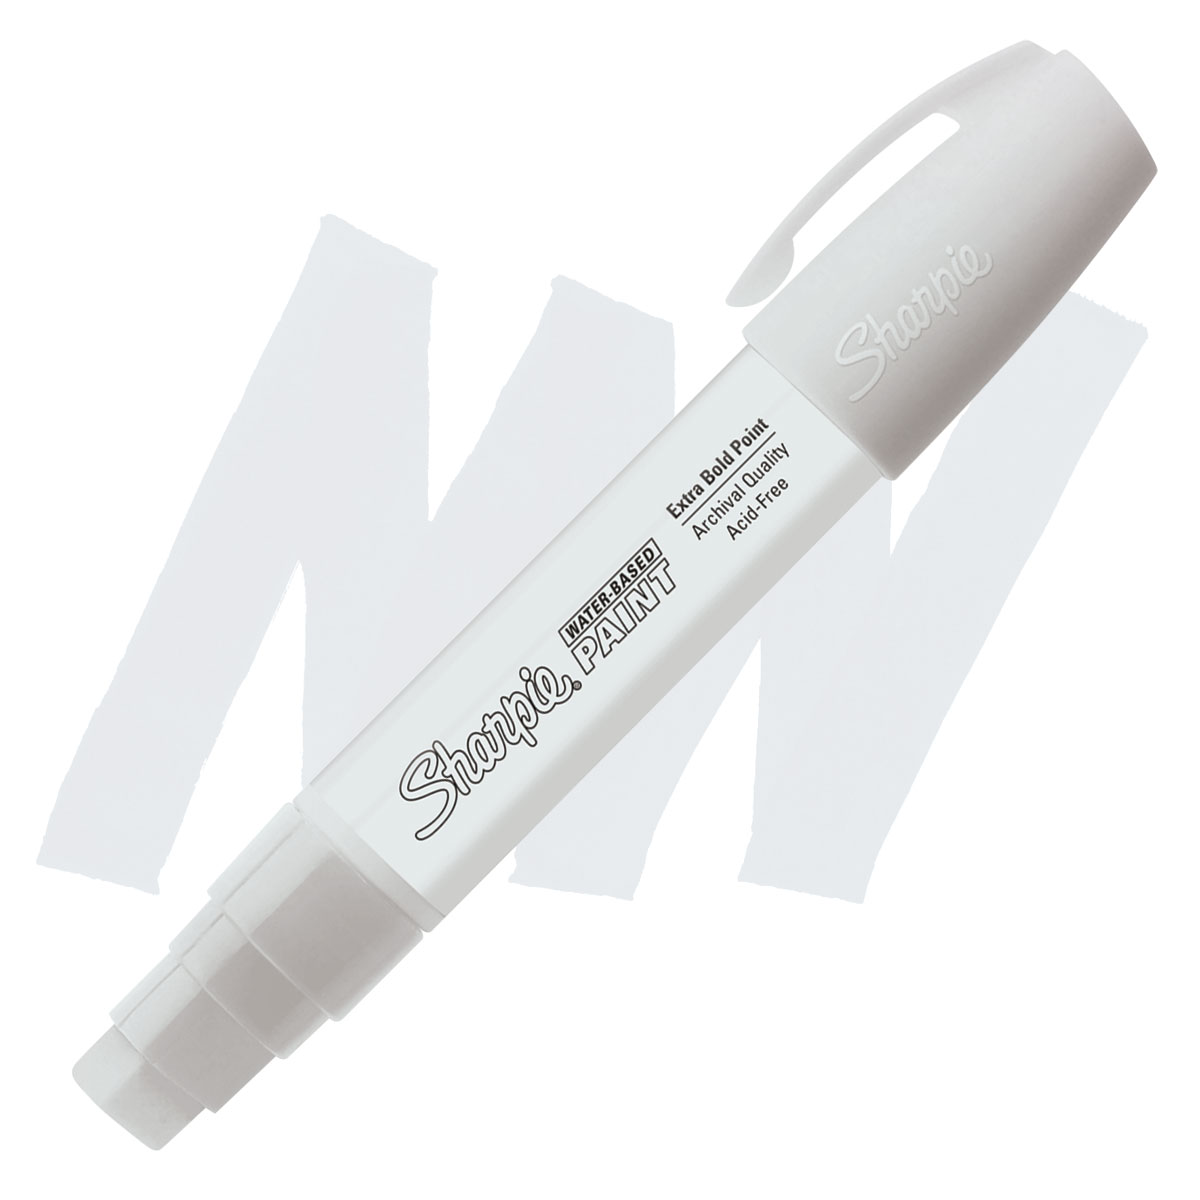 Sharpie Water-Based Paint Marker- Medium